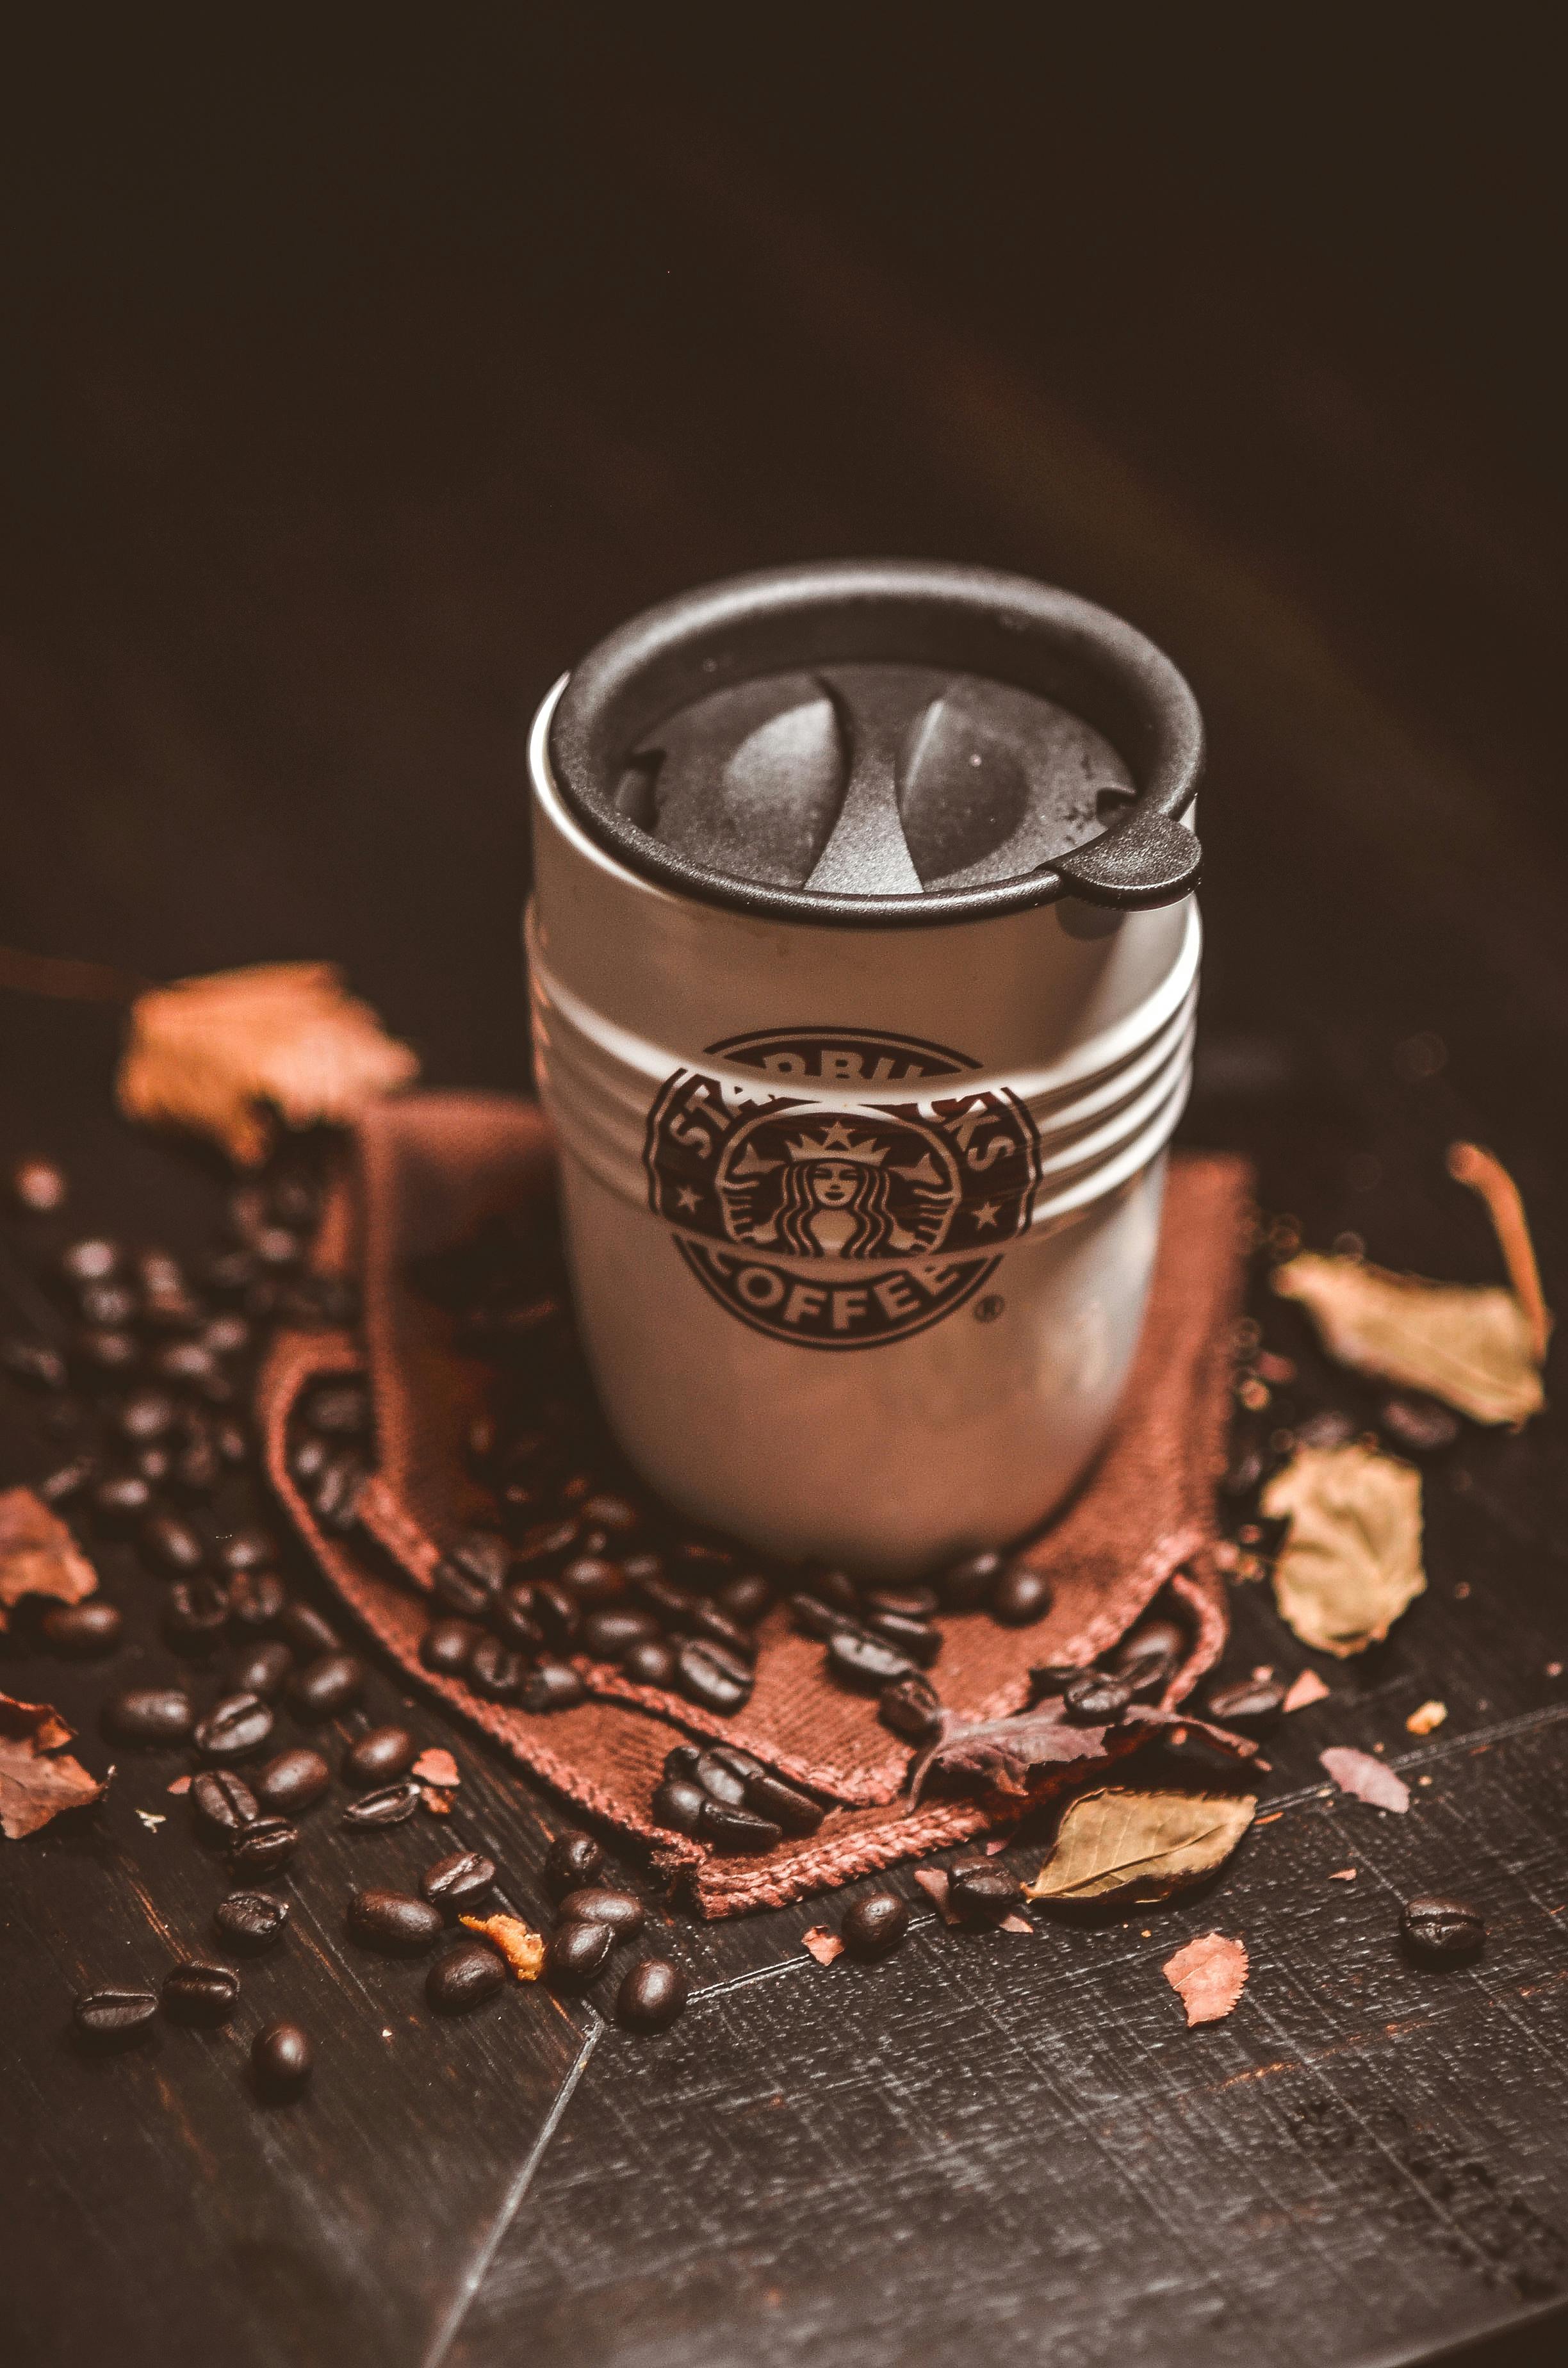 Starbucks Coffee Cup · Free Stock Photo